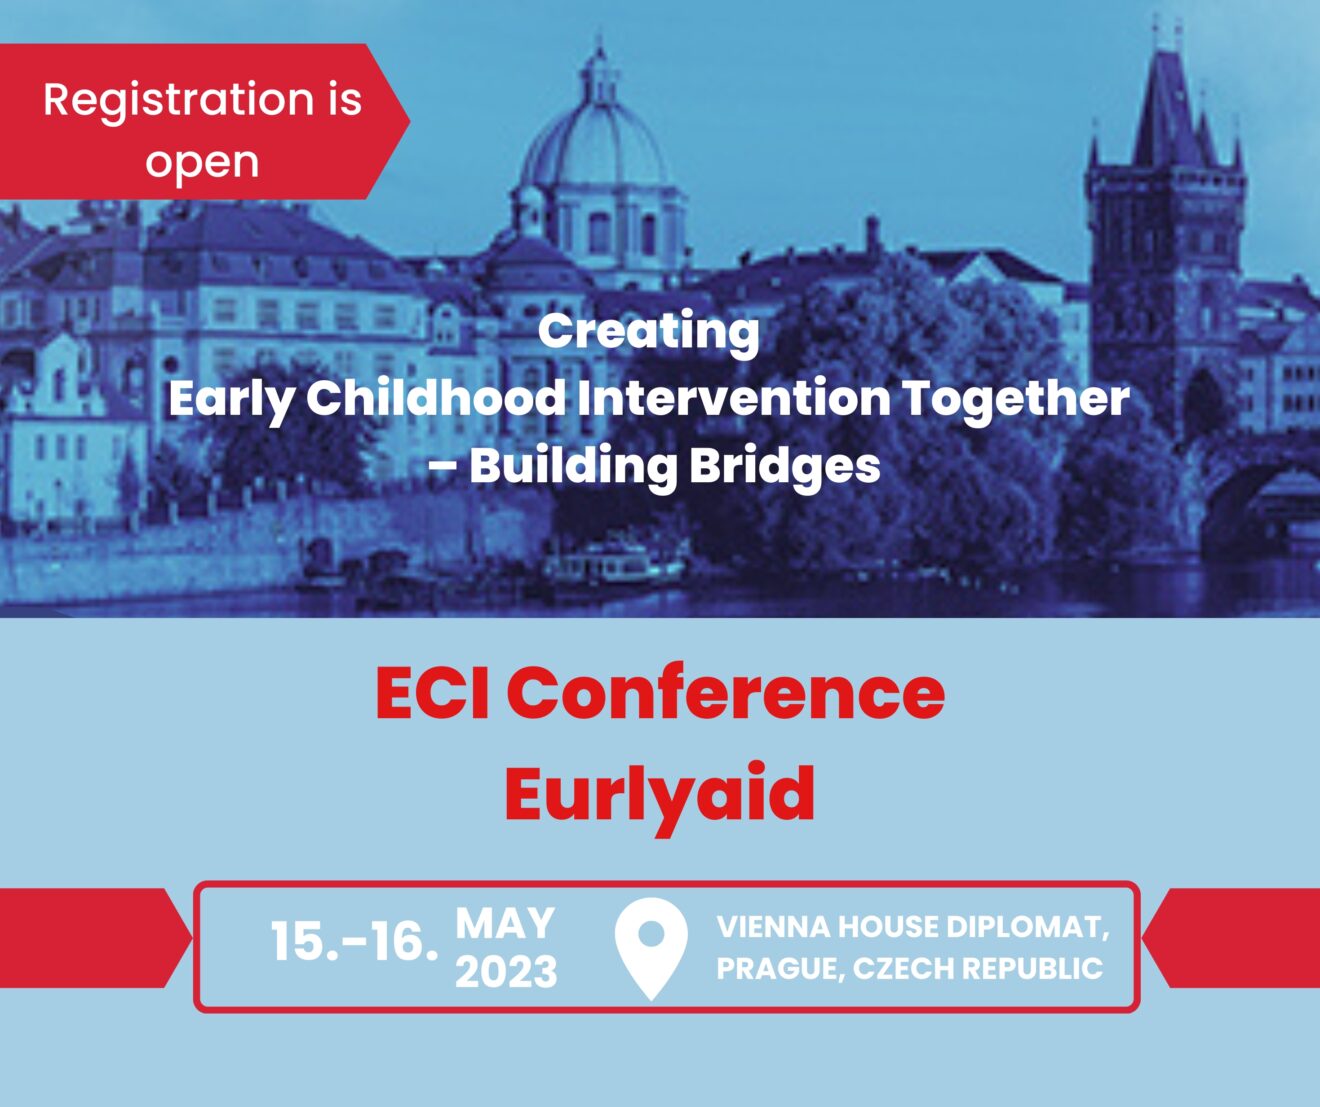 Eci Conference 2023, Prague, 15-16 may 2023 